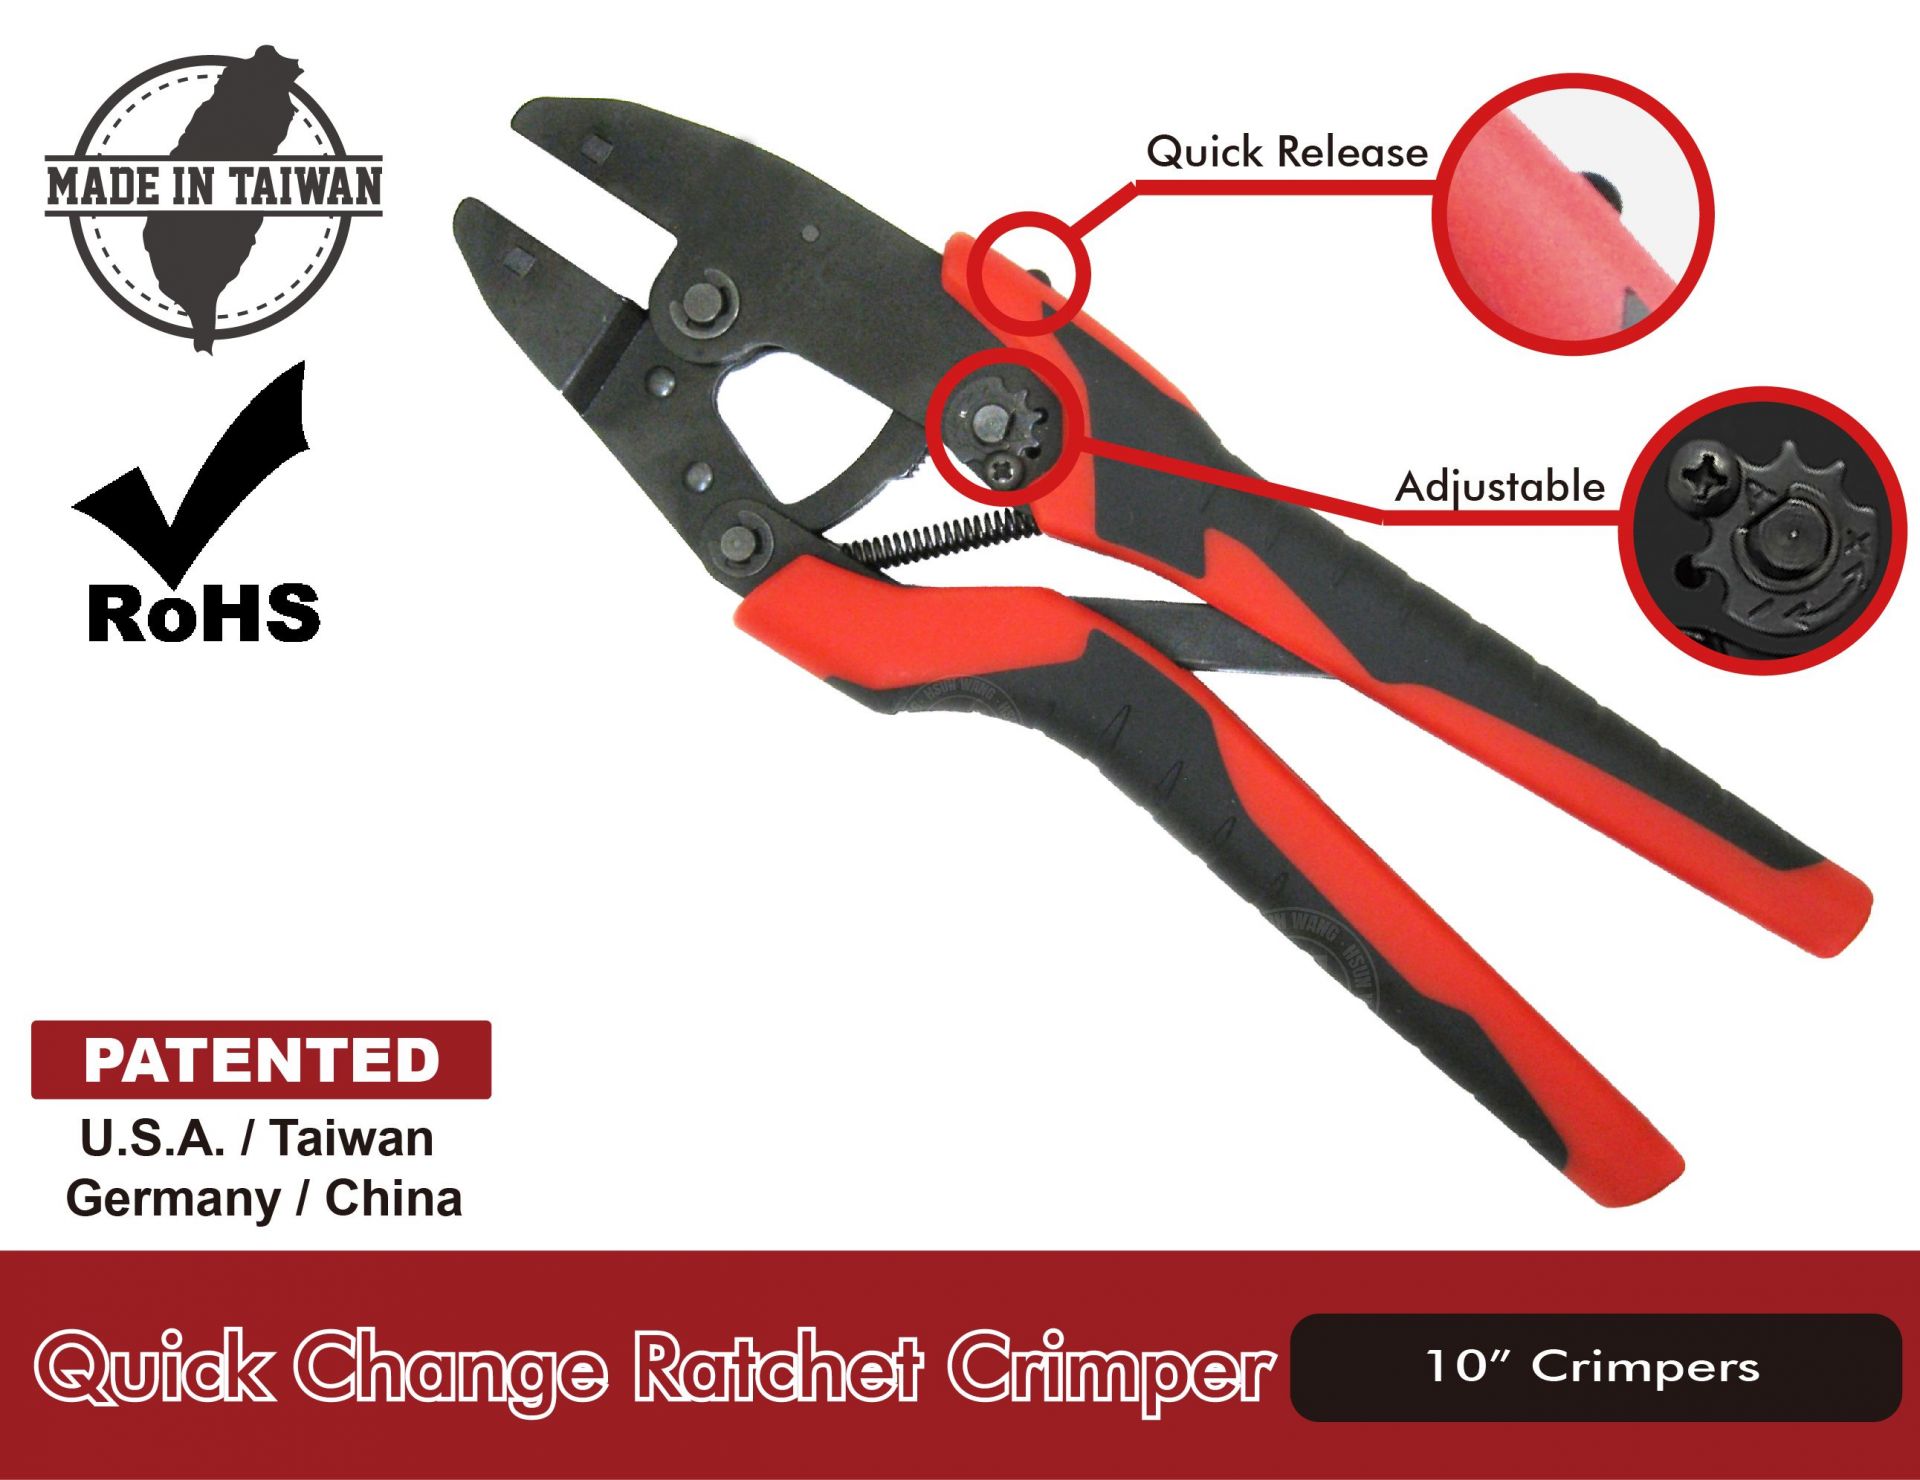 Quick Change Ratchet Crimper JEI -JEI Series-Jaw-crimp-crimping-crimp tool-crimping tool-crimp wire-ferrule crimp-ratchet crimp-Taiwan Manufacturer-hsunwang-licrim-hsunwang.com
